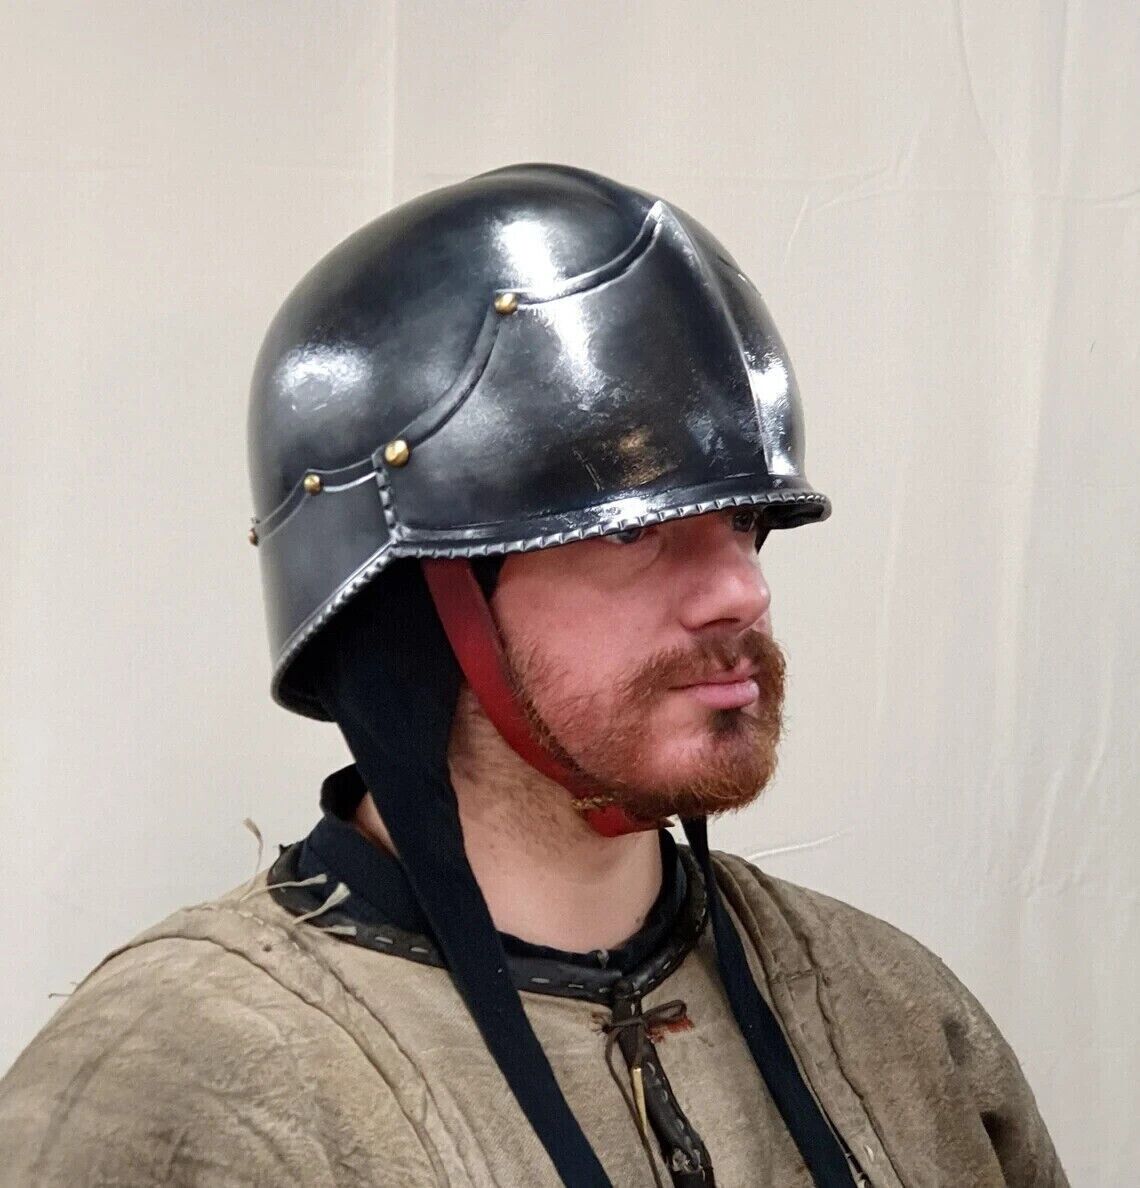 Helmet Brain Hood Armor Metal Larp Middle Ages Cosplay Knight Theater Film